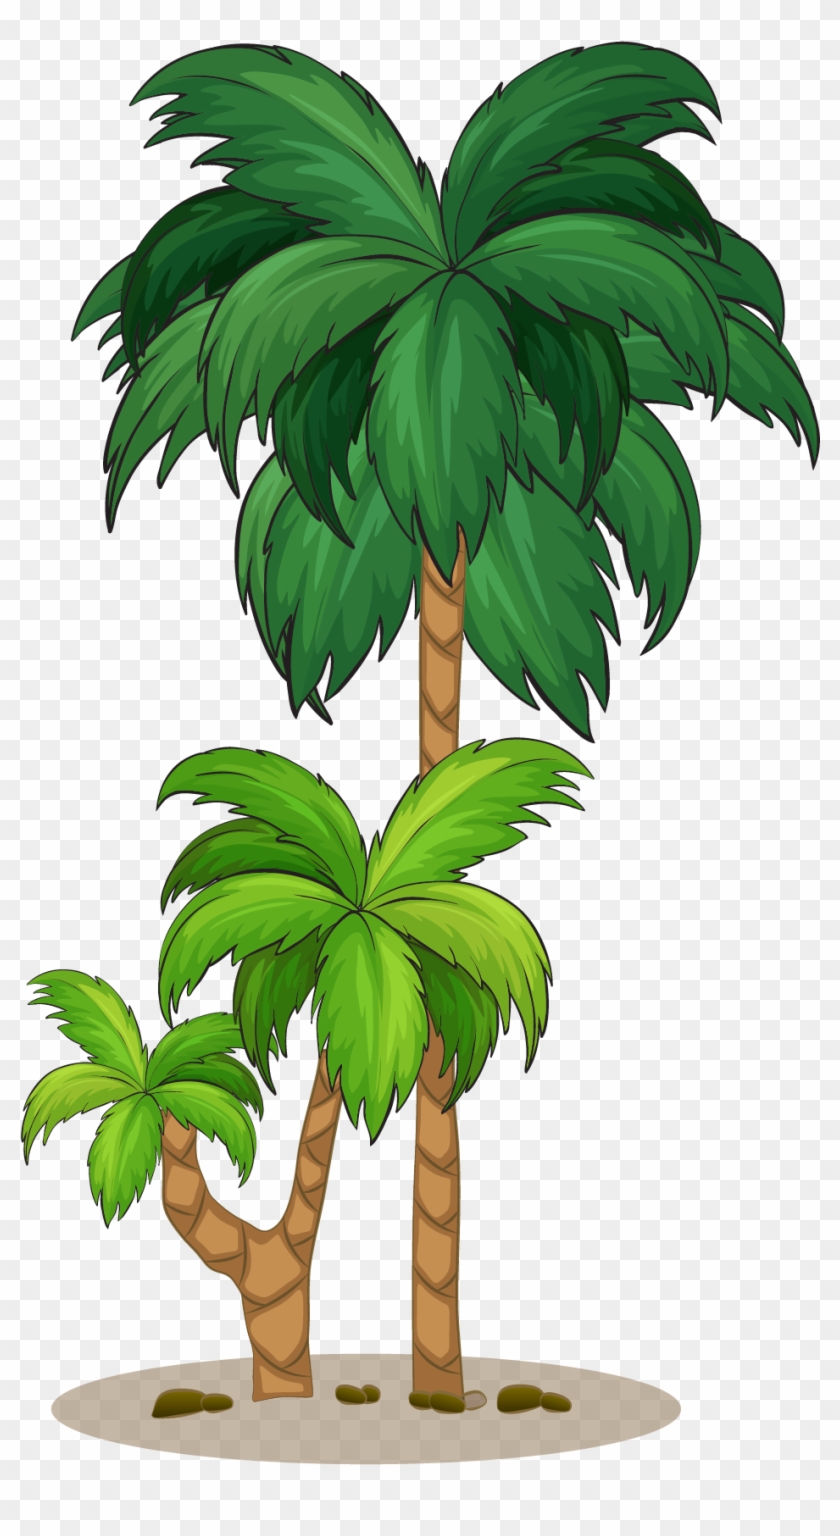 Coconut Arecaceae Tree Illustration - Coconut Arecaceae Tree Illustration #428982